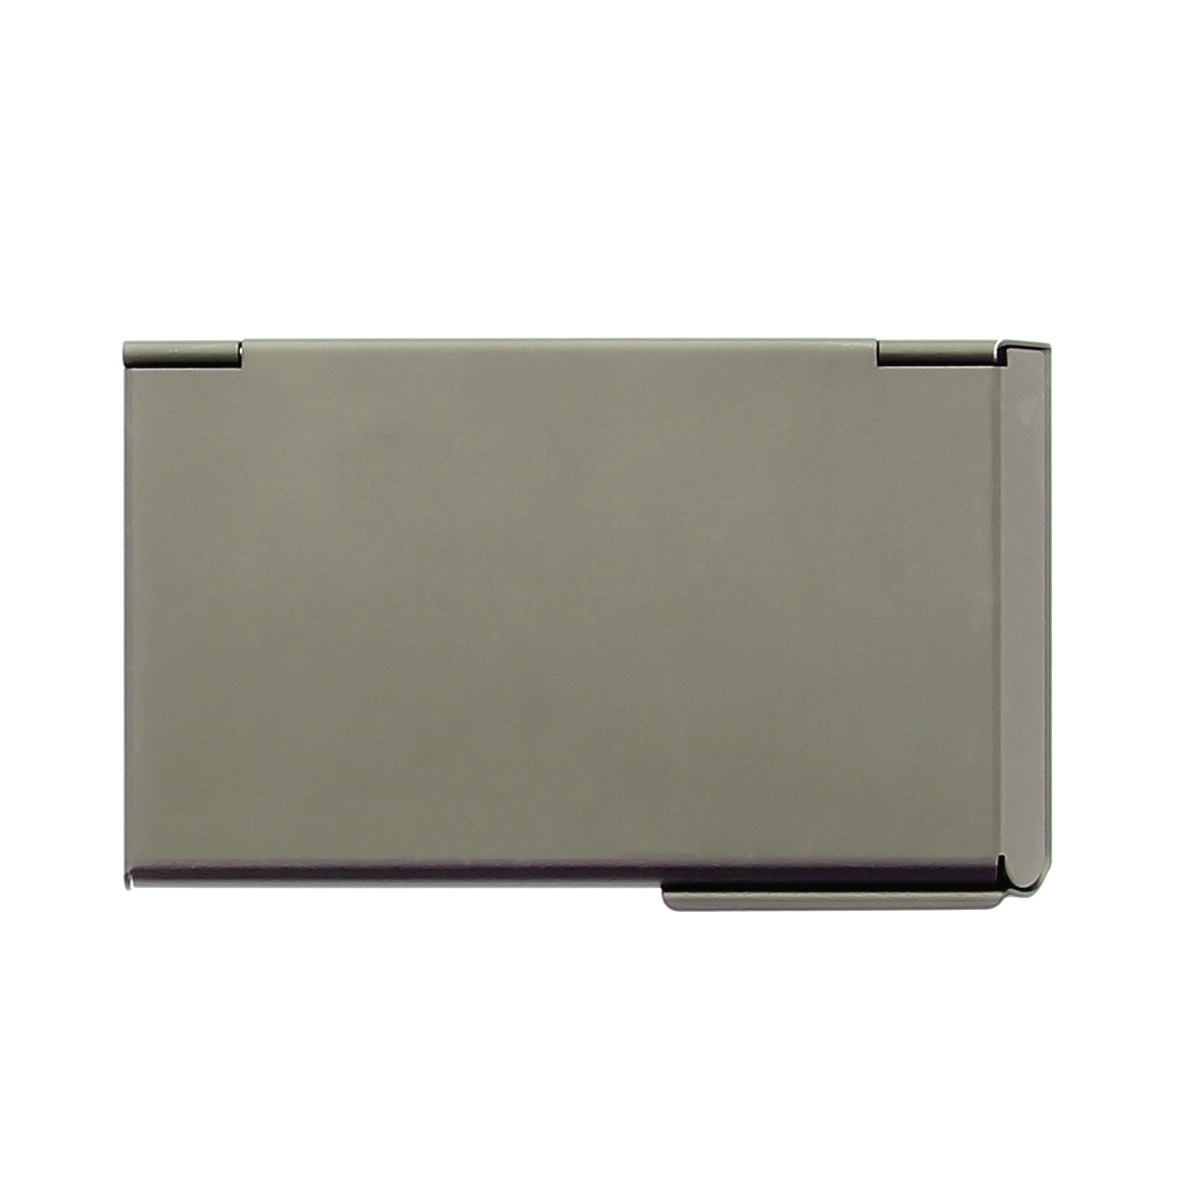 OGON Aluminum Business card holder One Touch - Dark Grey